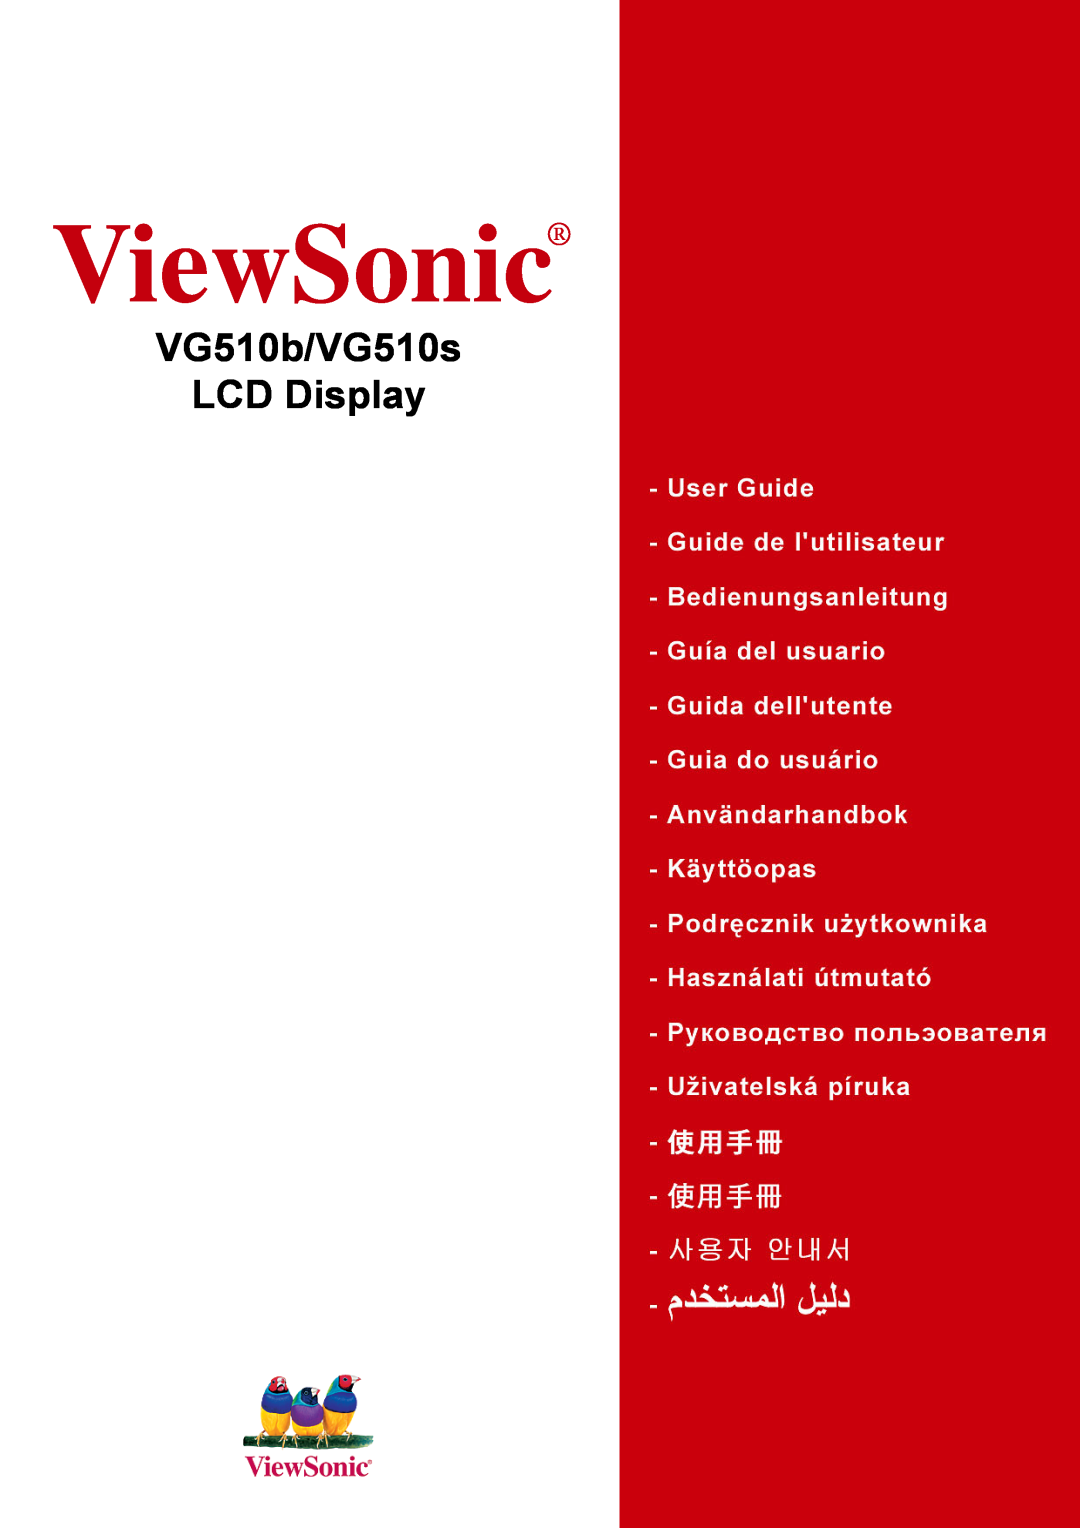 ViewSonic VG510b-1 manual ViewSonic, VG510b/VG510s LCD Display 